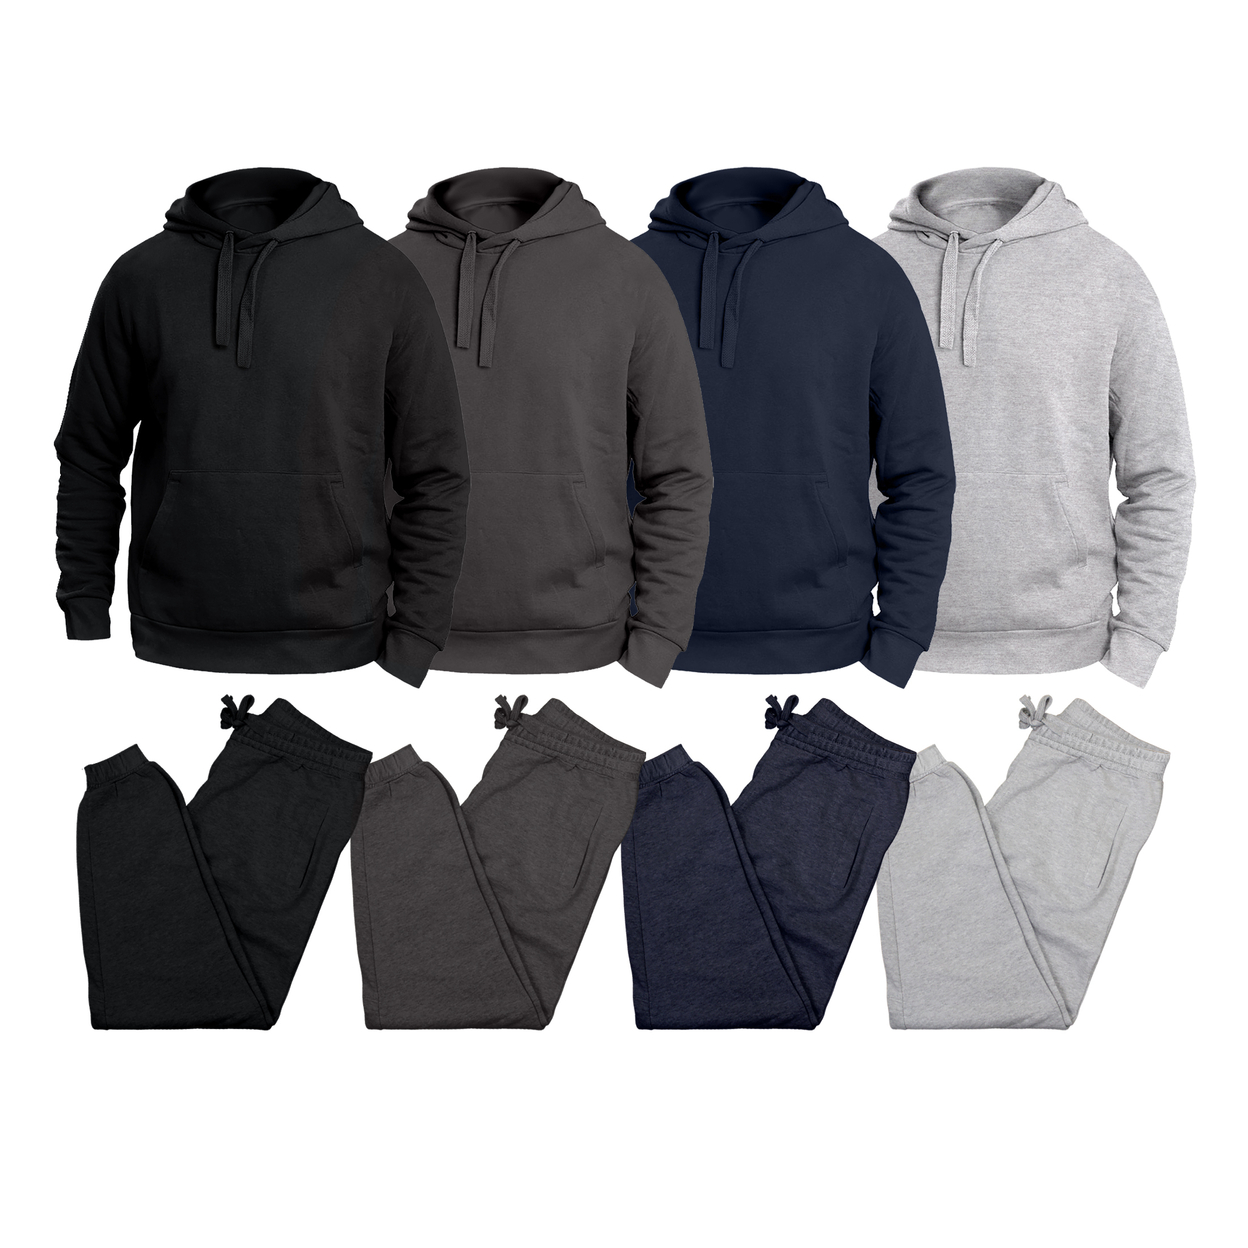 Multi-Pack: Big & Tall Men's Winter Warm Cozy Athletic Fleece Lined Multi-Pocket Cargo Sweatsuit - Black, 2-pack, Small